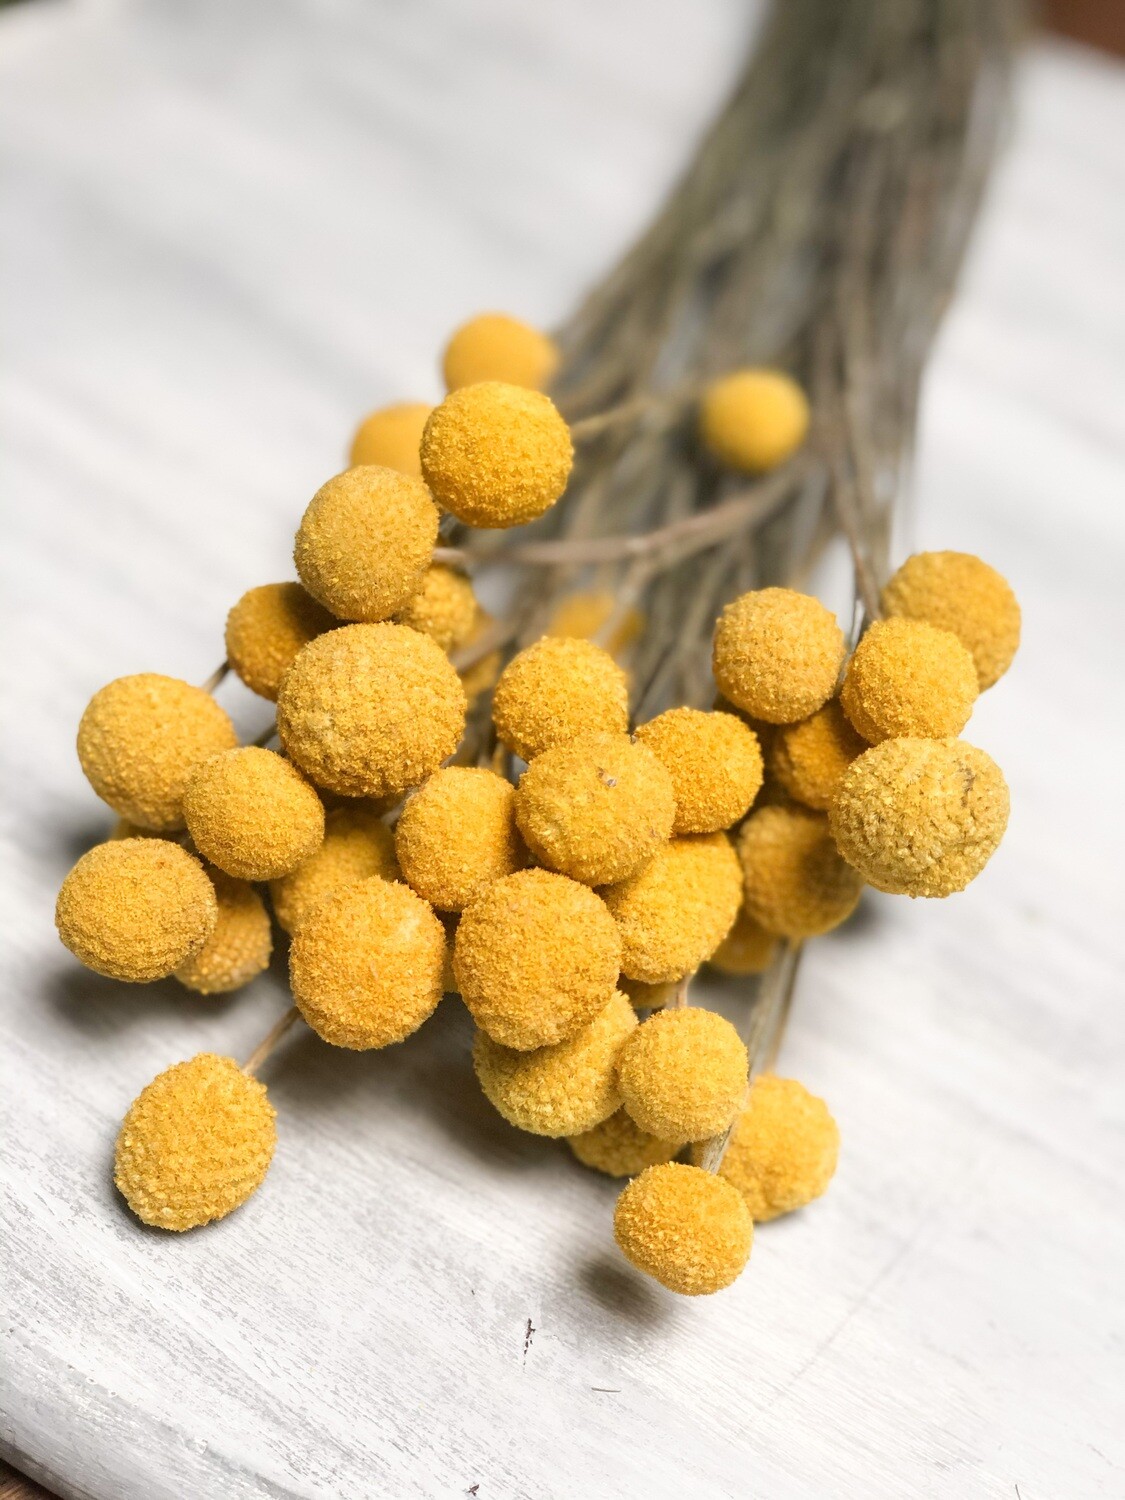 Dried Flower bunch - Craspedia (billy balls)